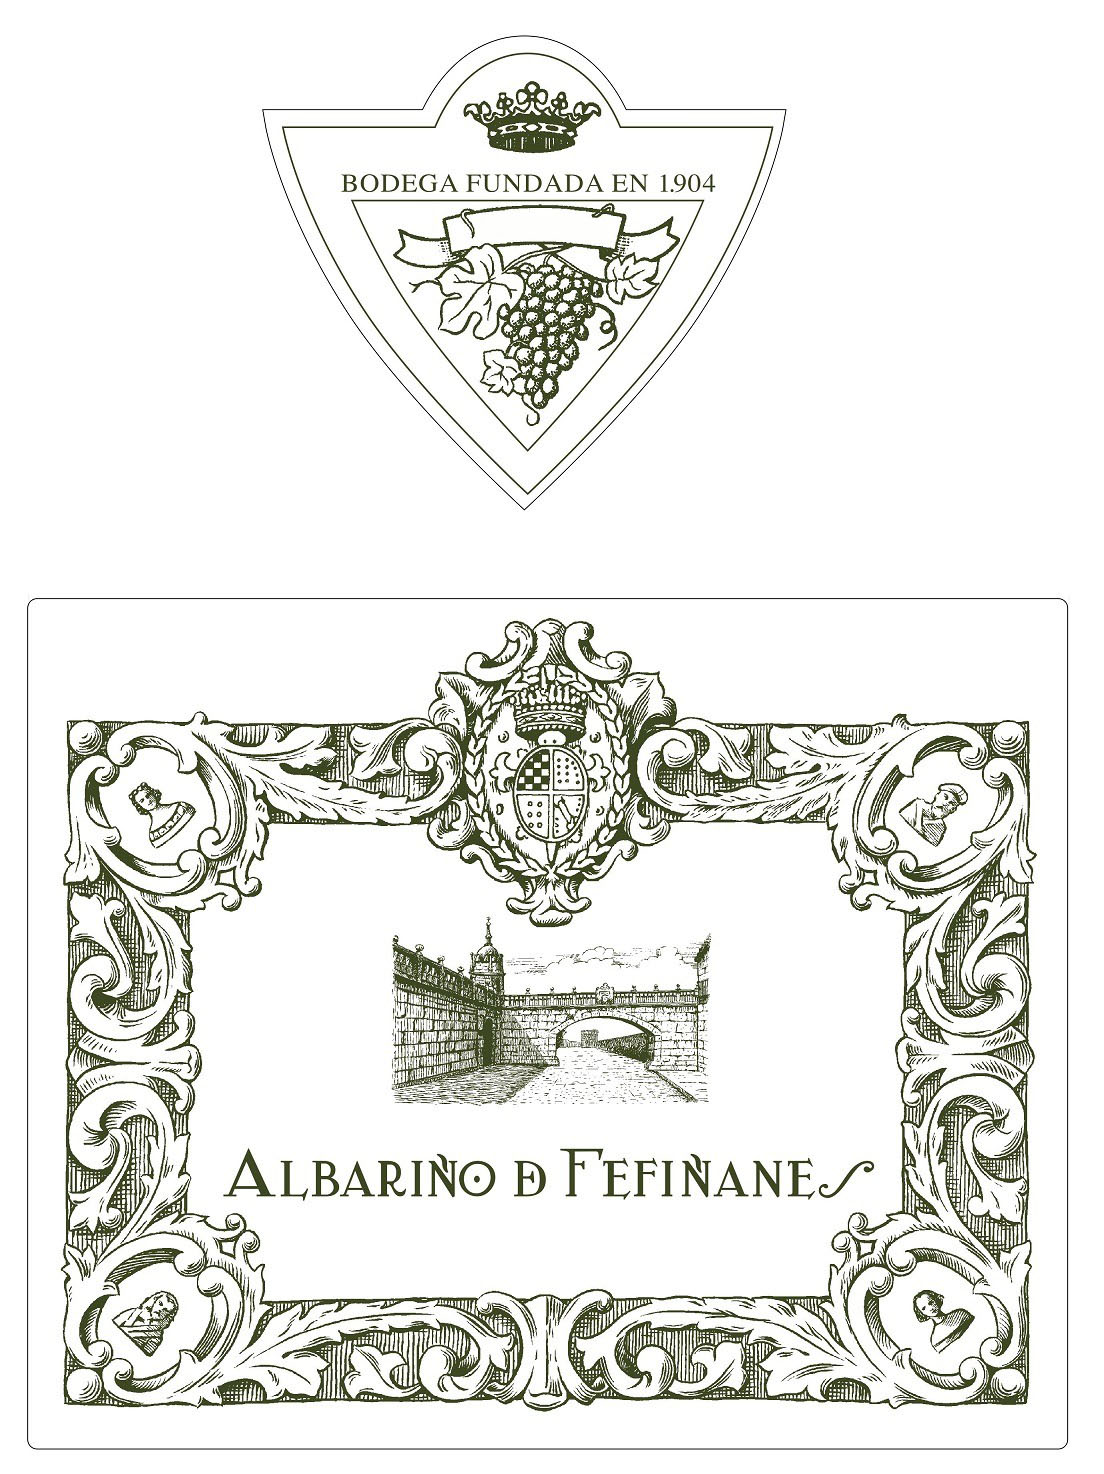 Fefinanes Albarino de - Online - Order Spanish Wines California the from Savignon French - Timeless Wine - | - United Wines Port Albarino - Chardonnay Wines Wines Cabernet 2022 - States